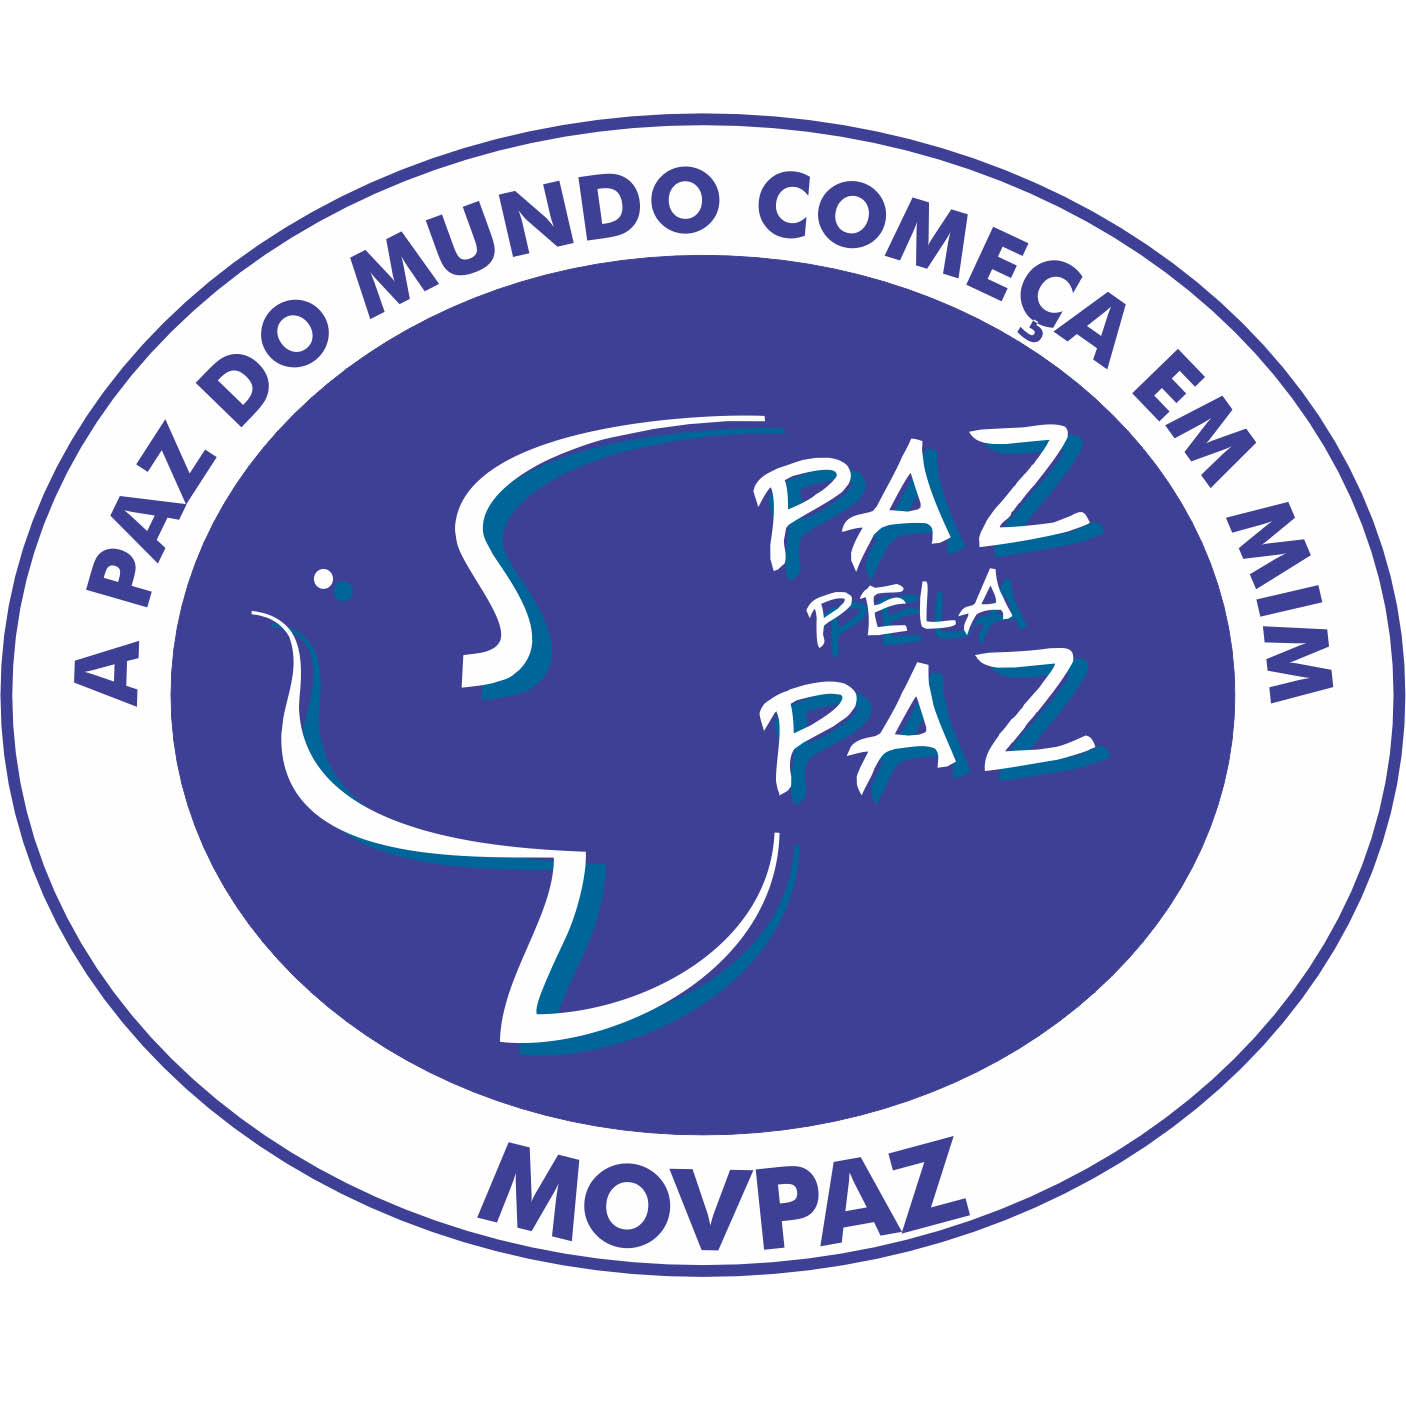 MOVPAZ-PB